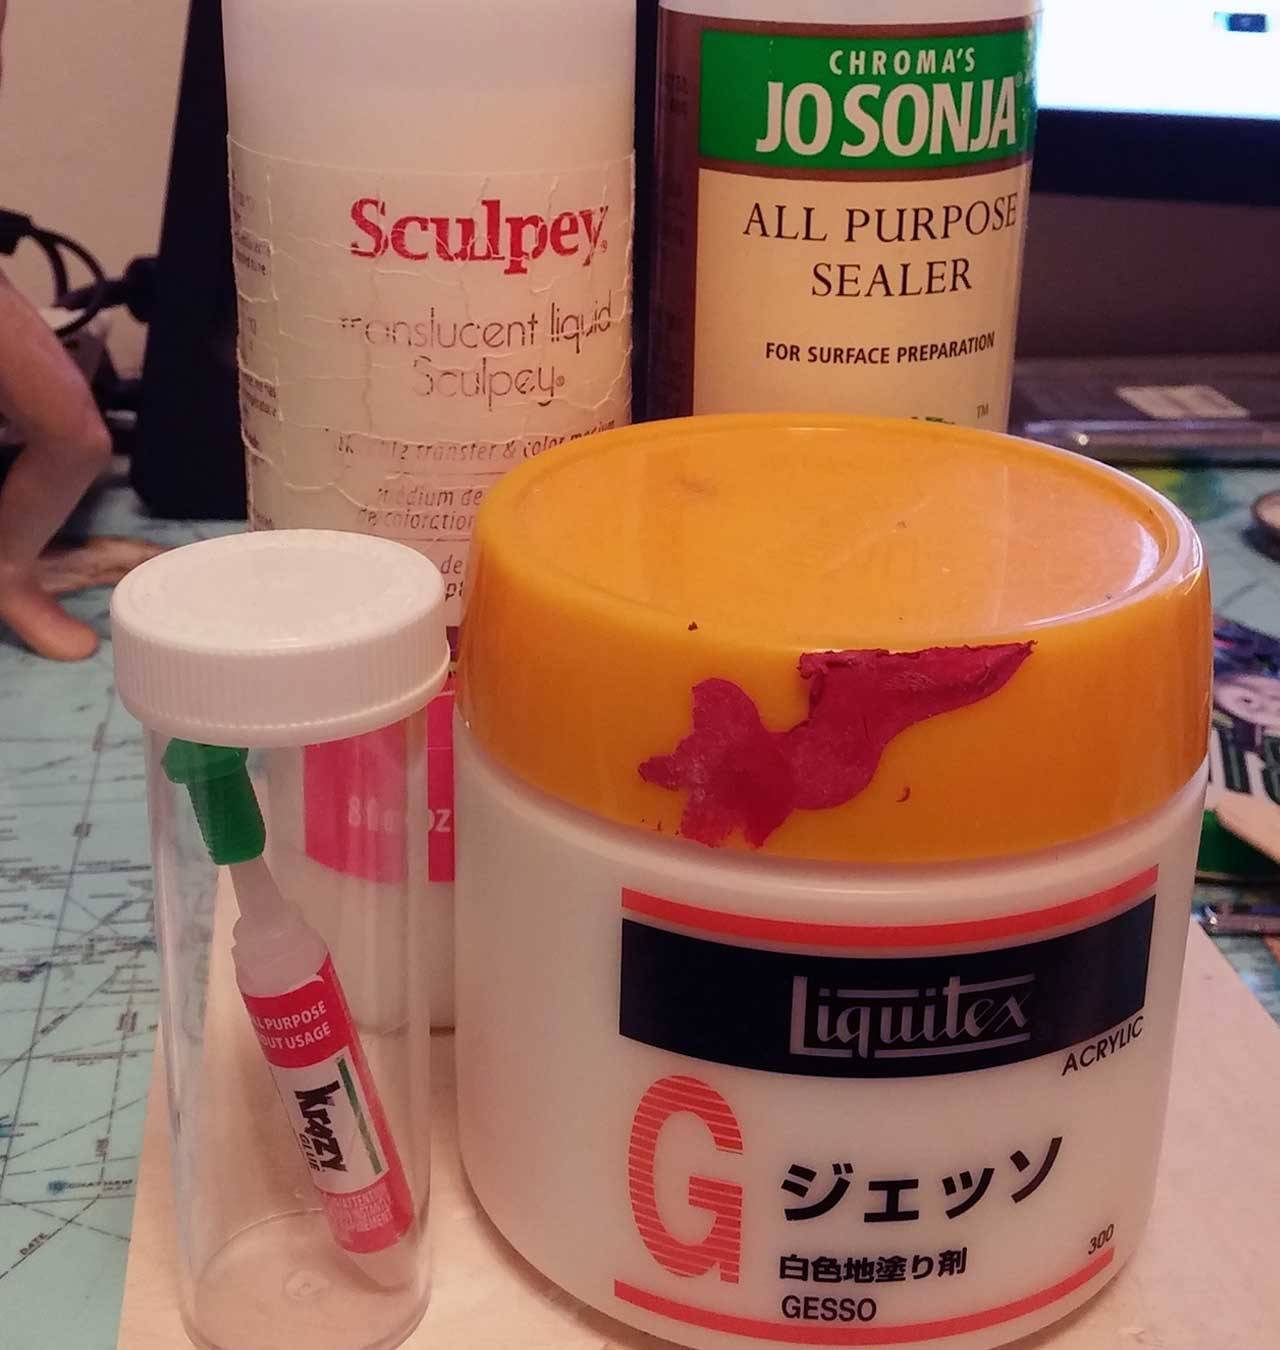 Liquitex Gesso, Krazy glue, Jo Sonja All Purpose Sealer and Sculpey translucent liquid on desk